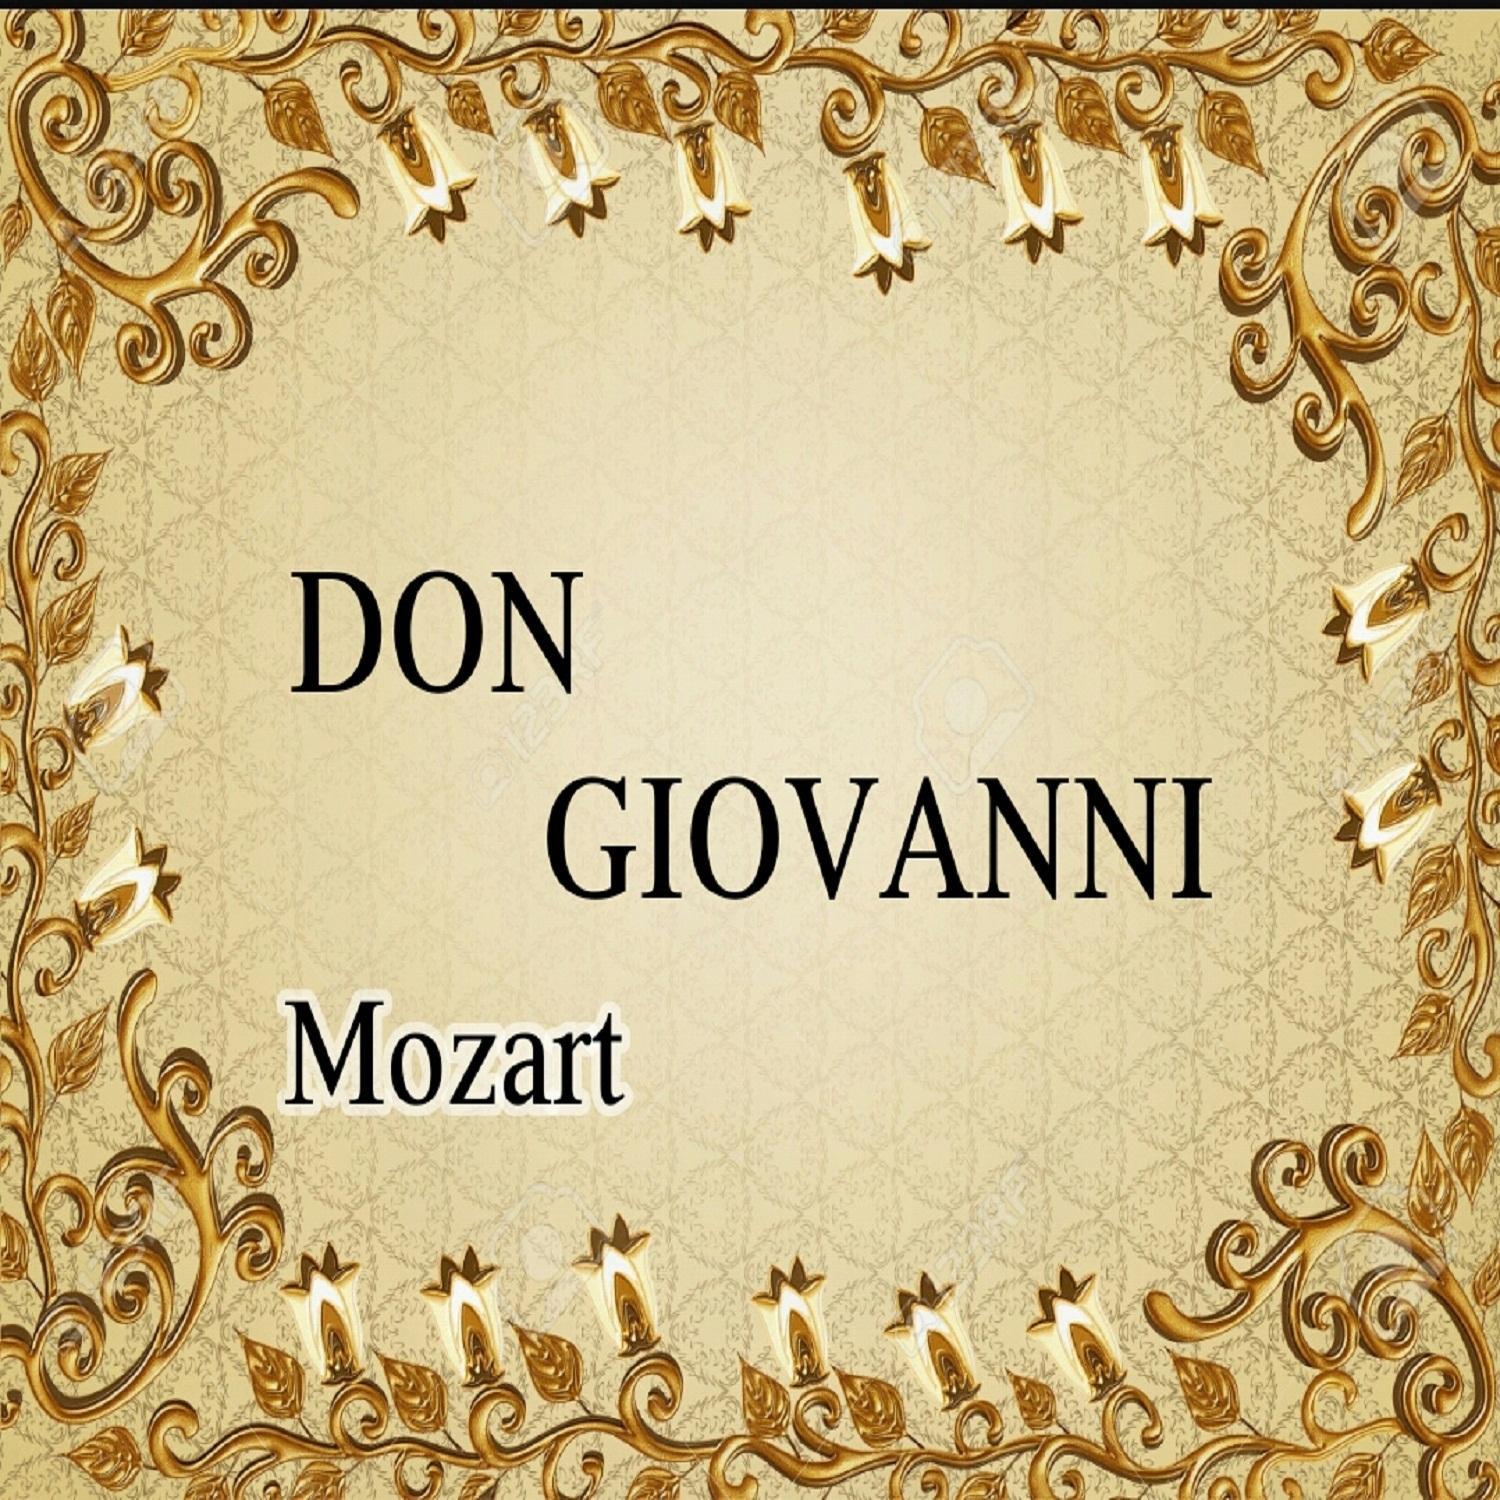 Don Giovanni, Act I: "Protegga il giusto cielo"